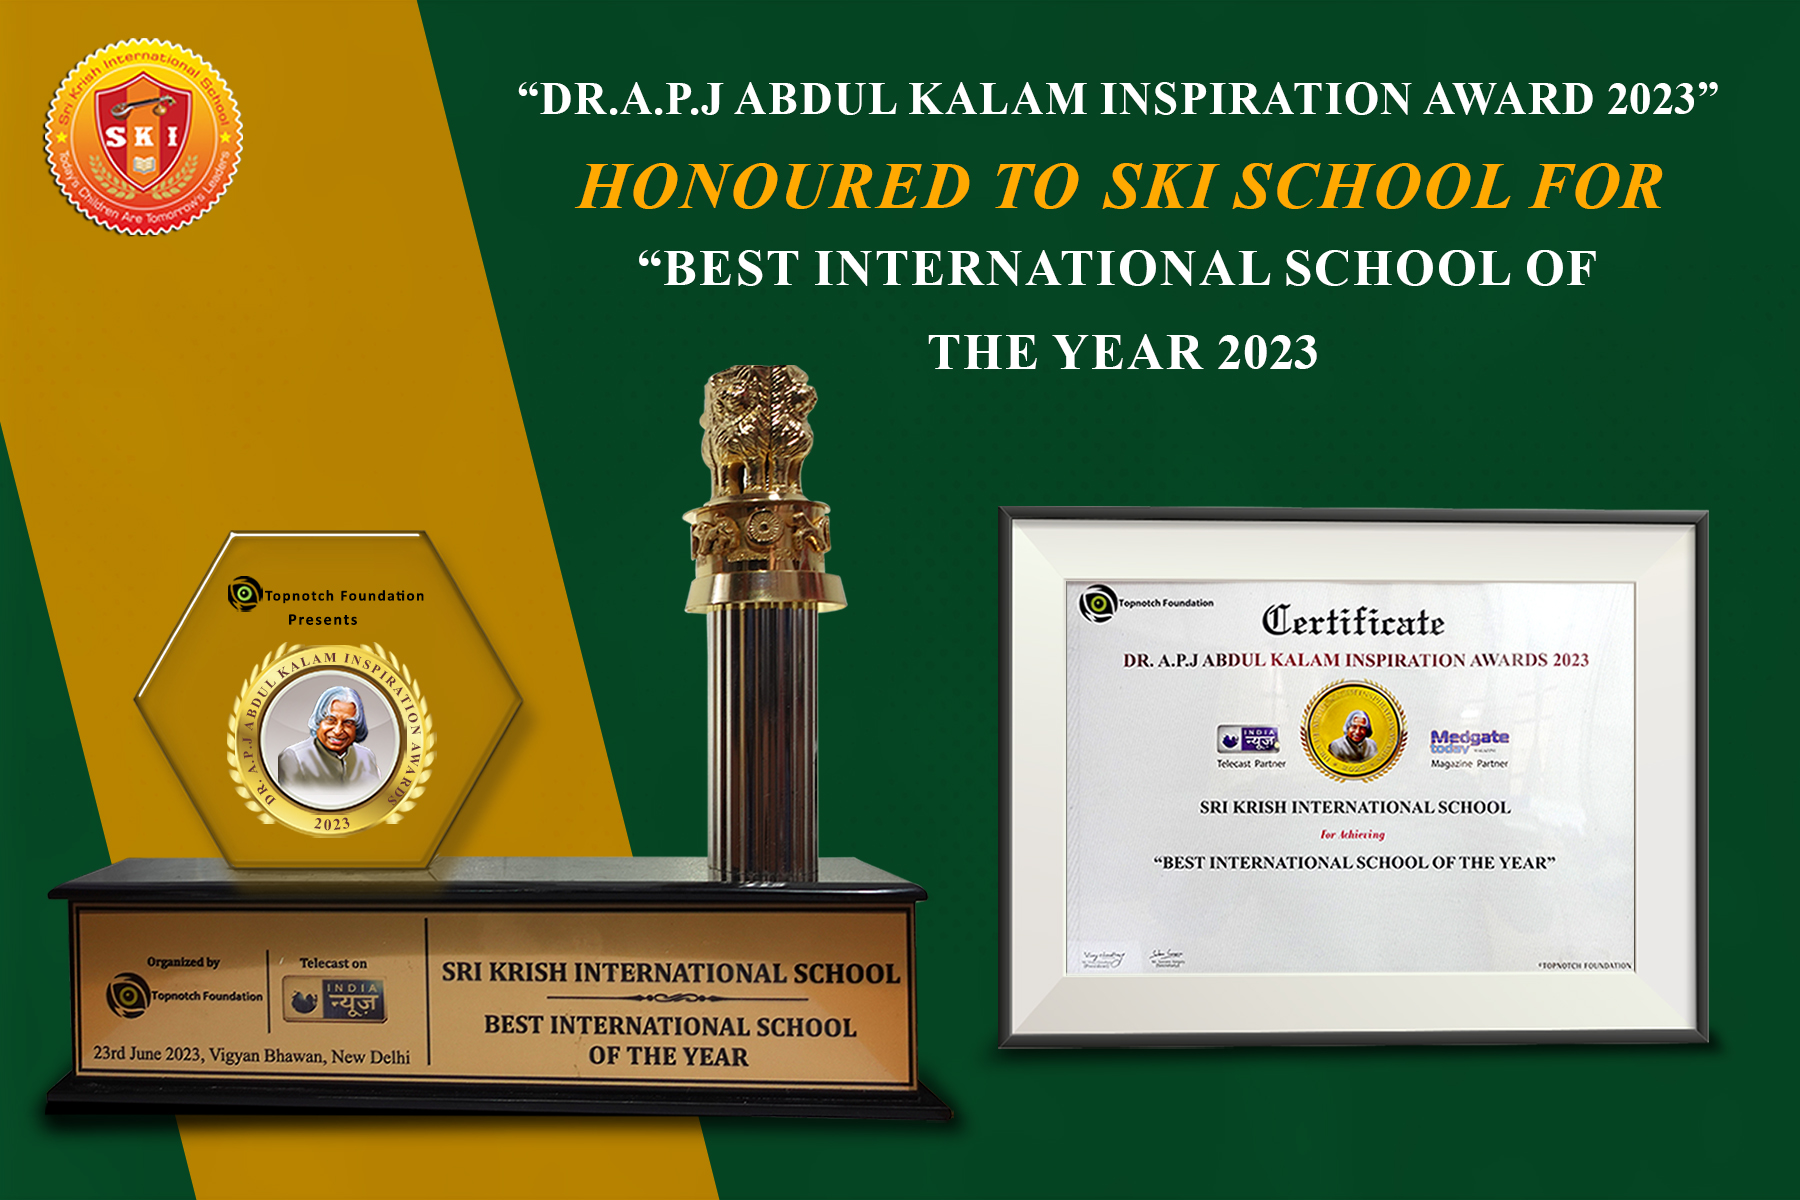 Best International School of the Year 2023 - Dr. A.P.J. Abdul Kalam Inspiration Award 2023